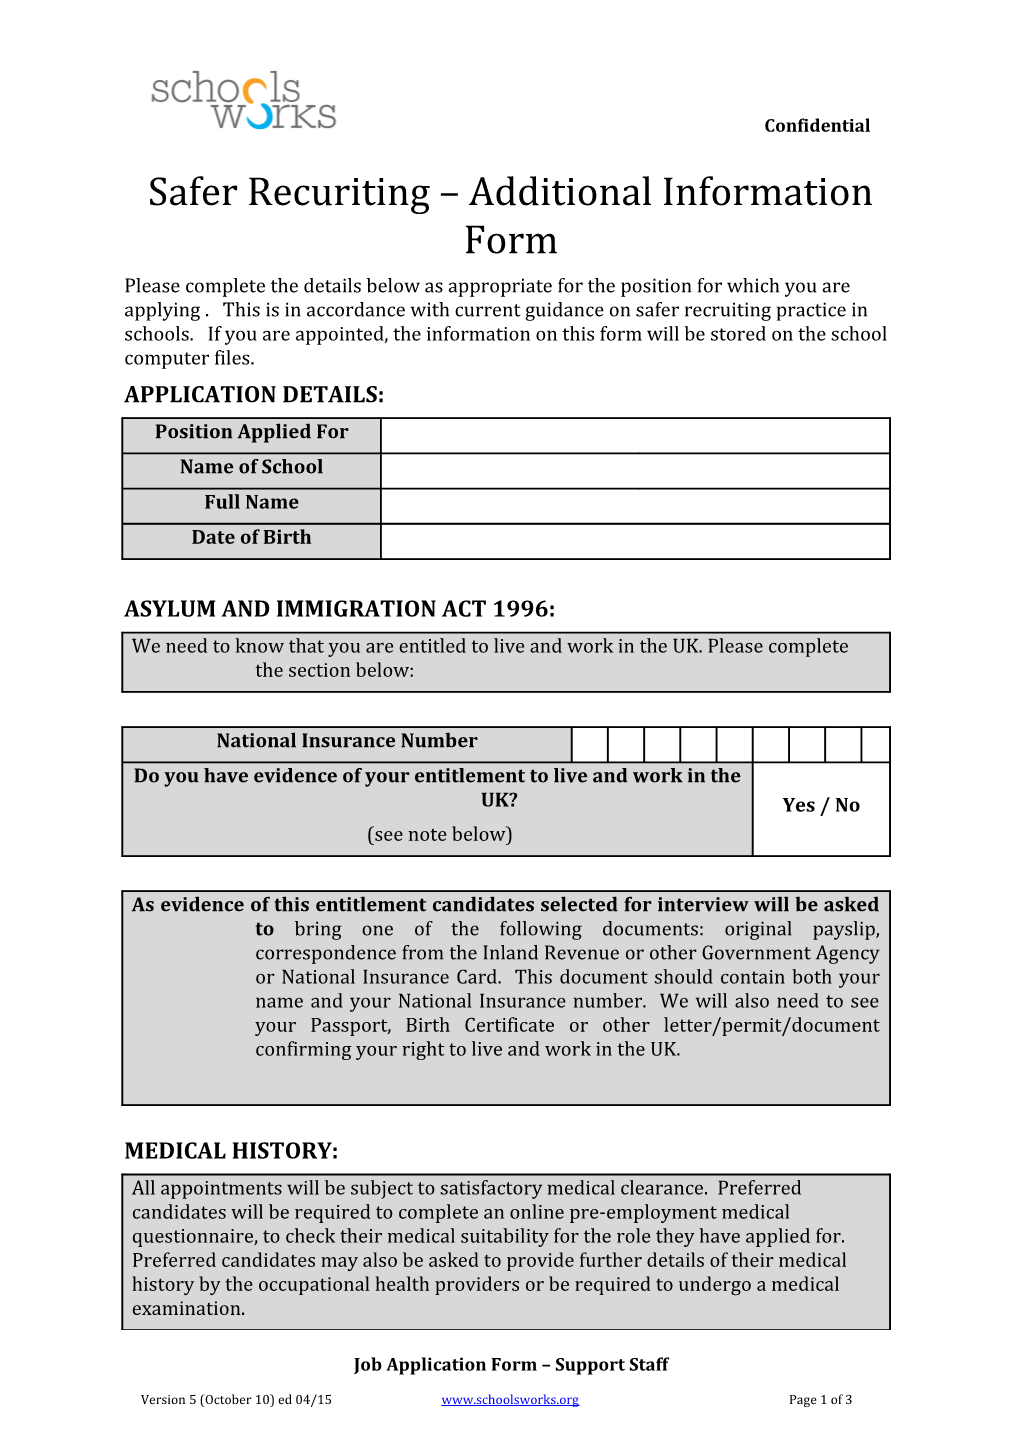 Safer Recuriting Additional Information Form